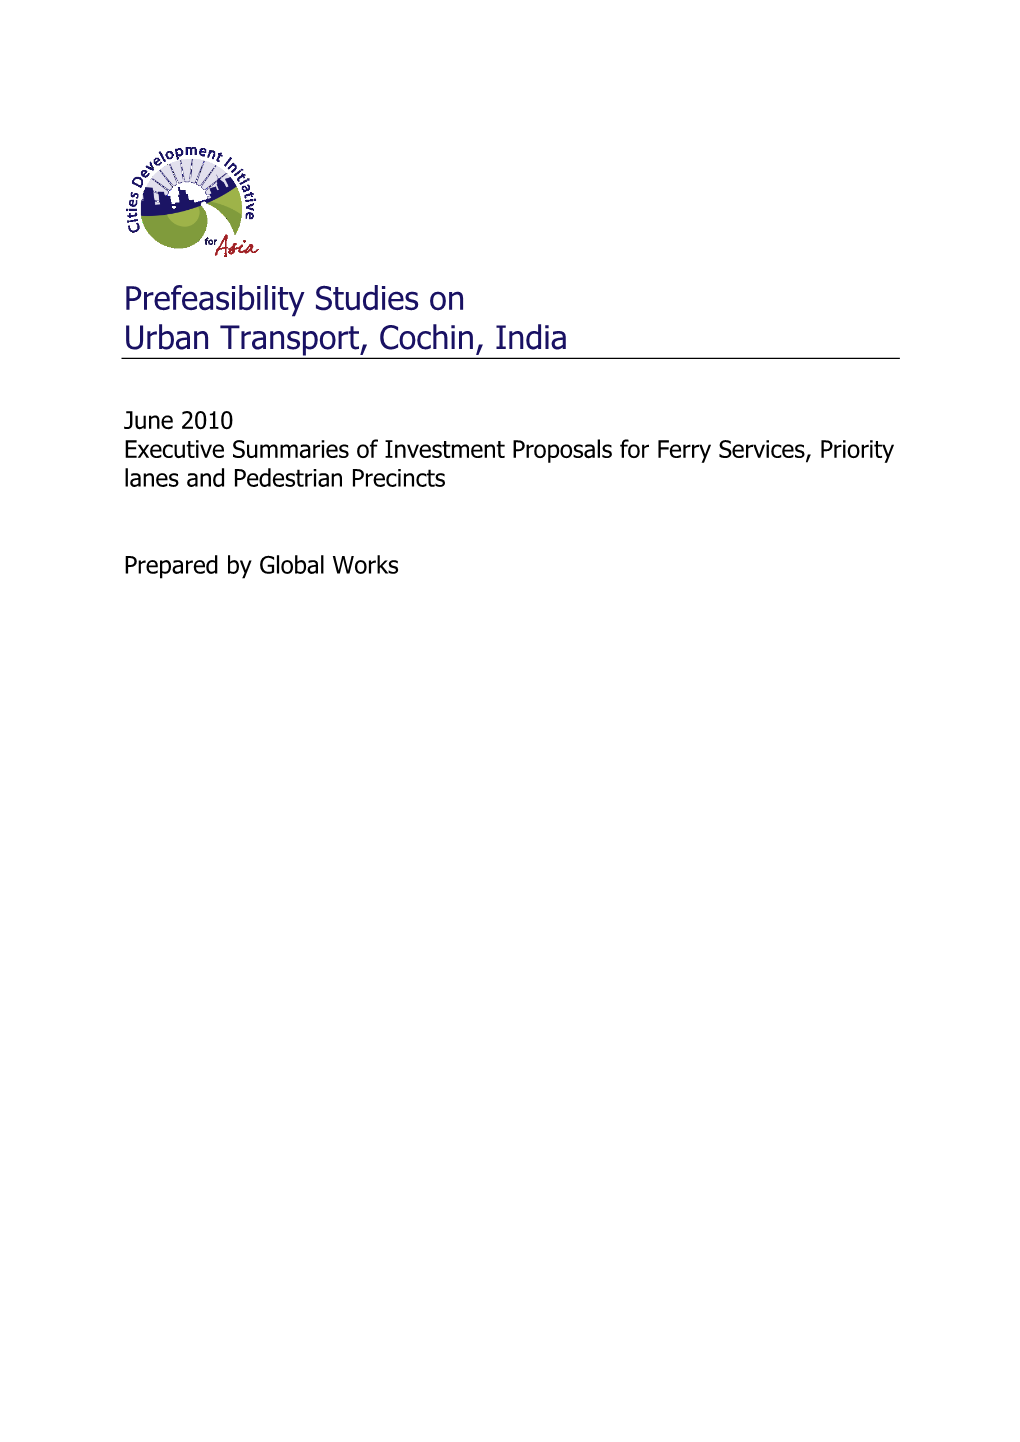 Prefeasibility Studies on Urban Transport, Cochin, India